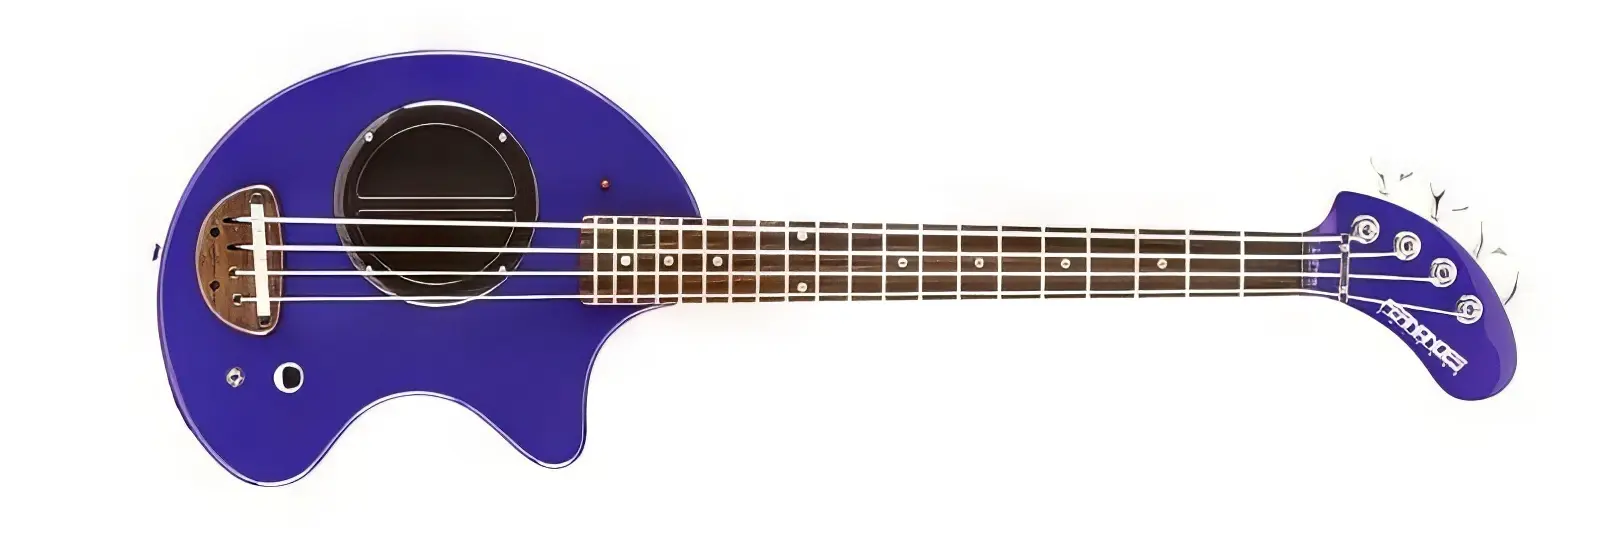 a są też niebieskie gitara fernanedes podróżny bas